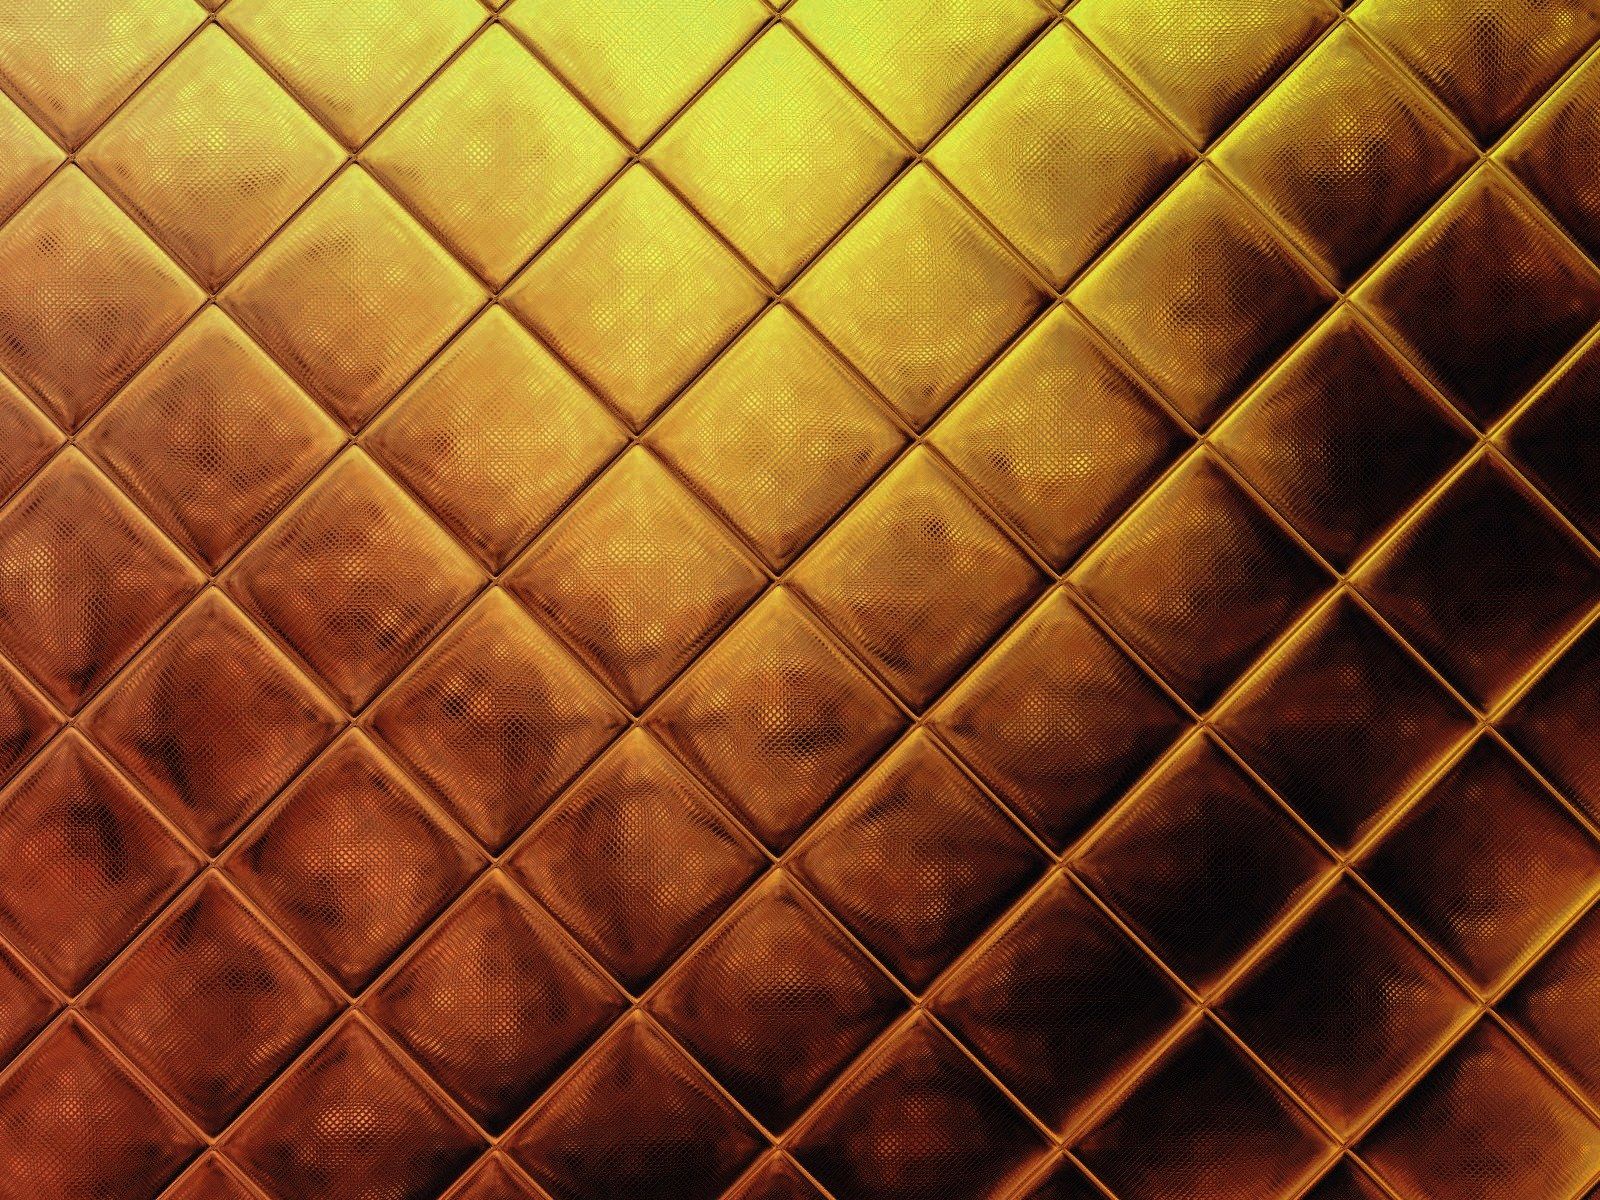 40 HD Gold Wallpaper Backgrounds For Free Desktop Download